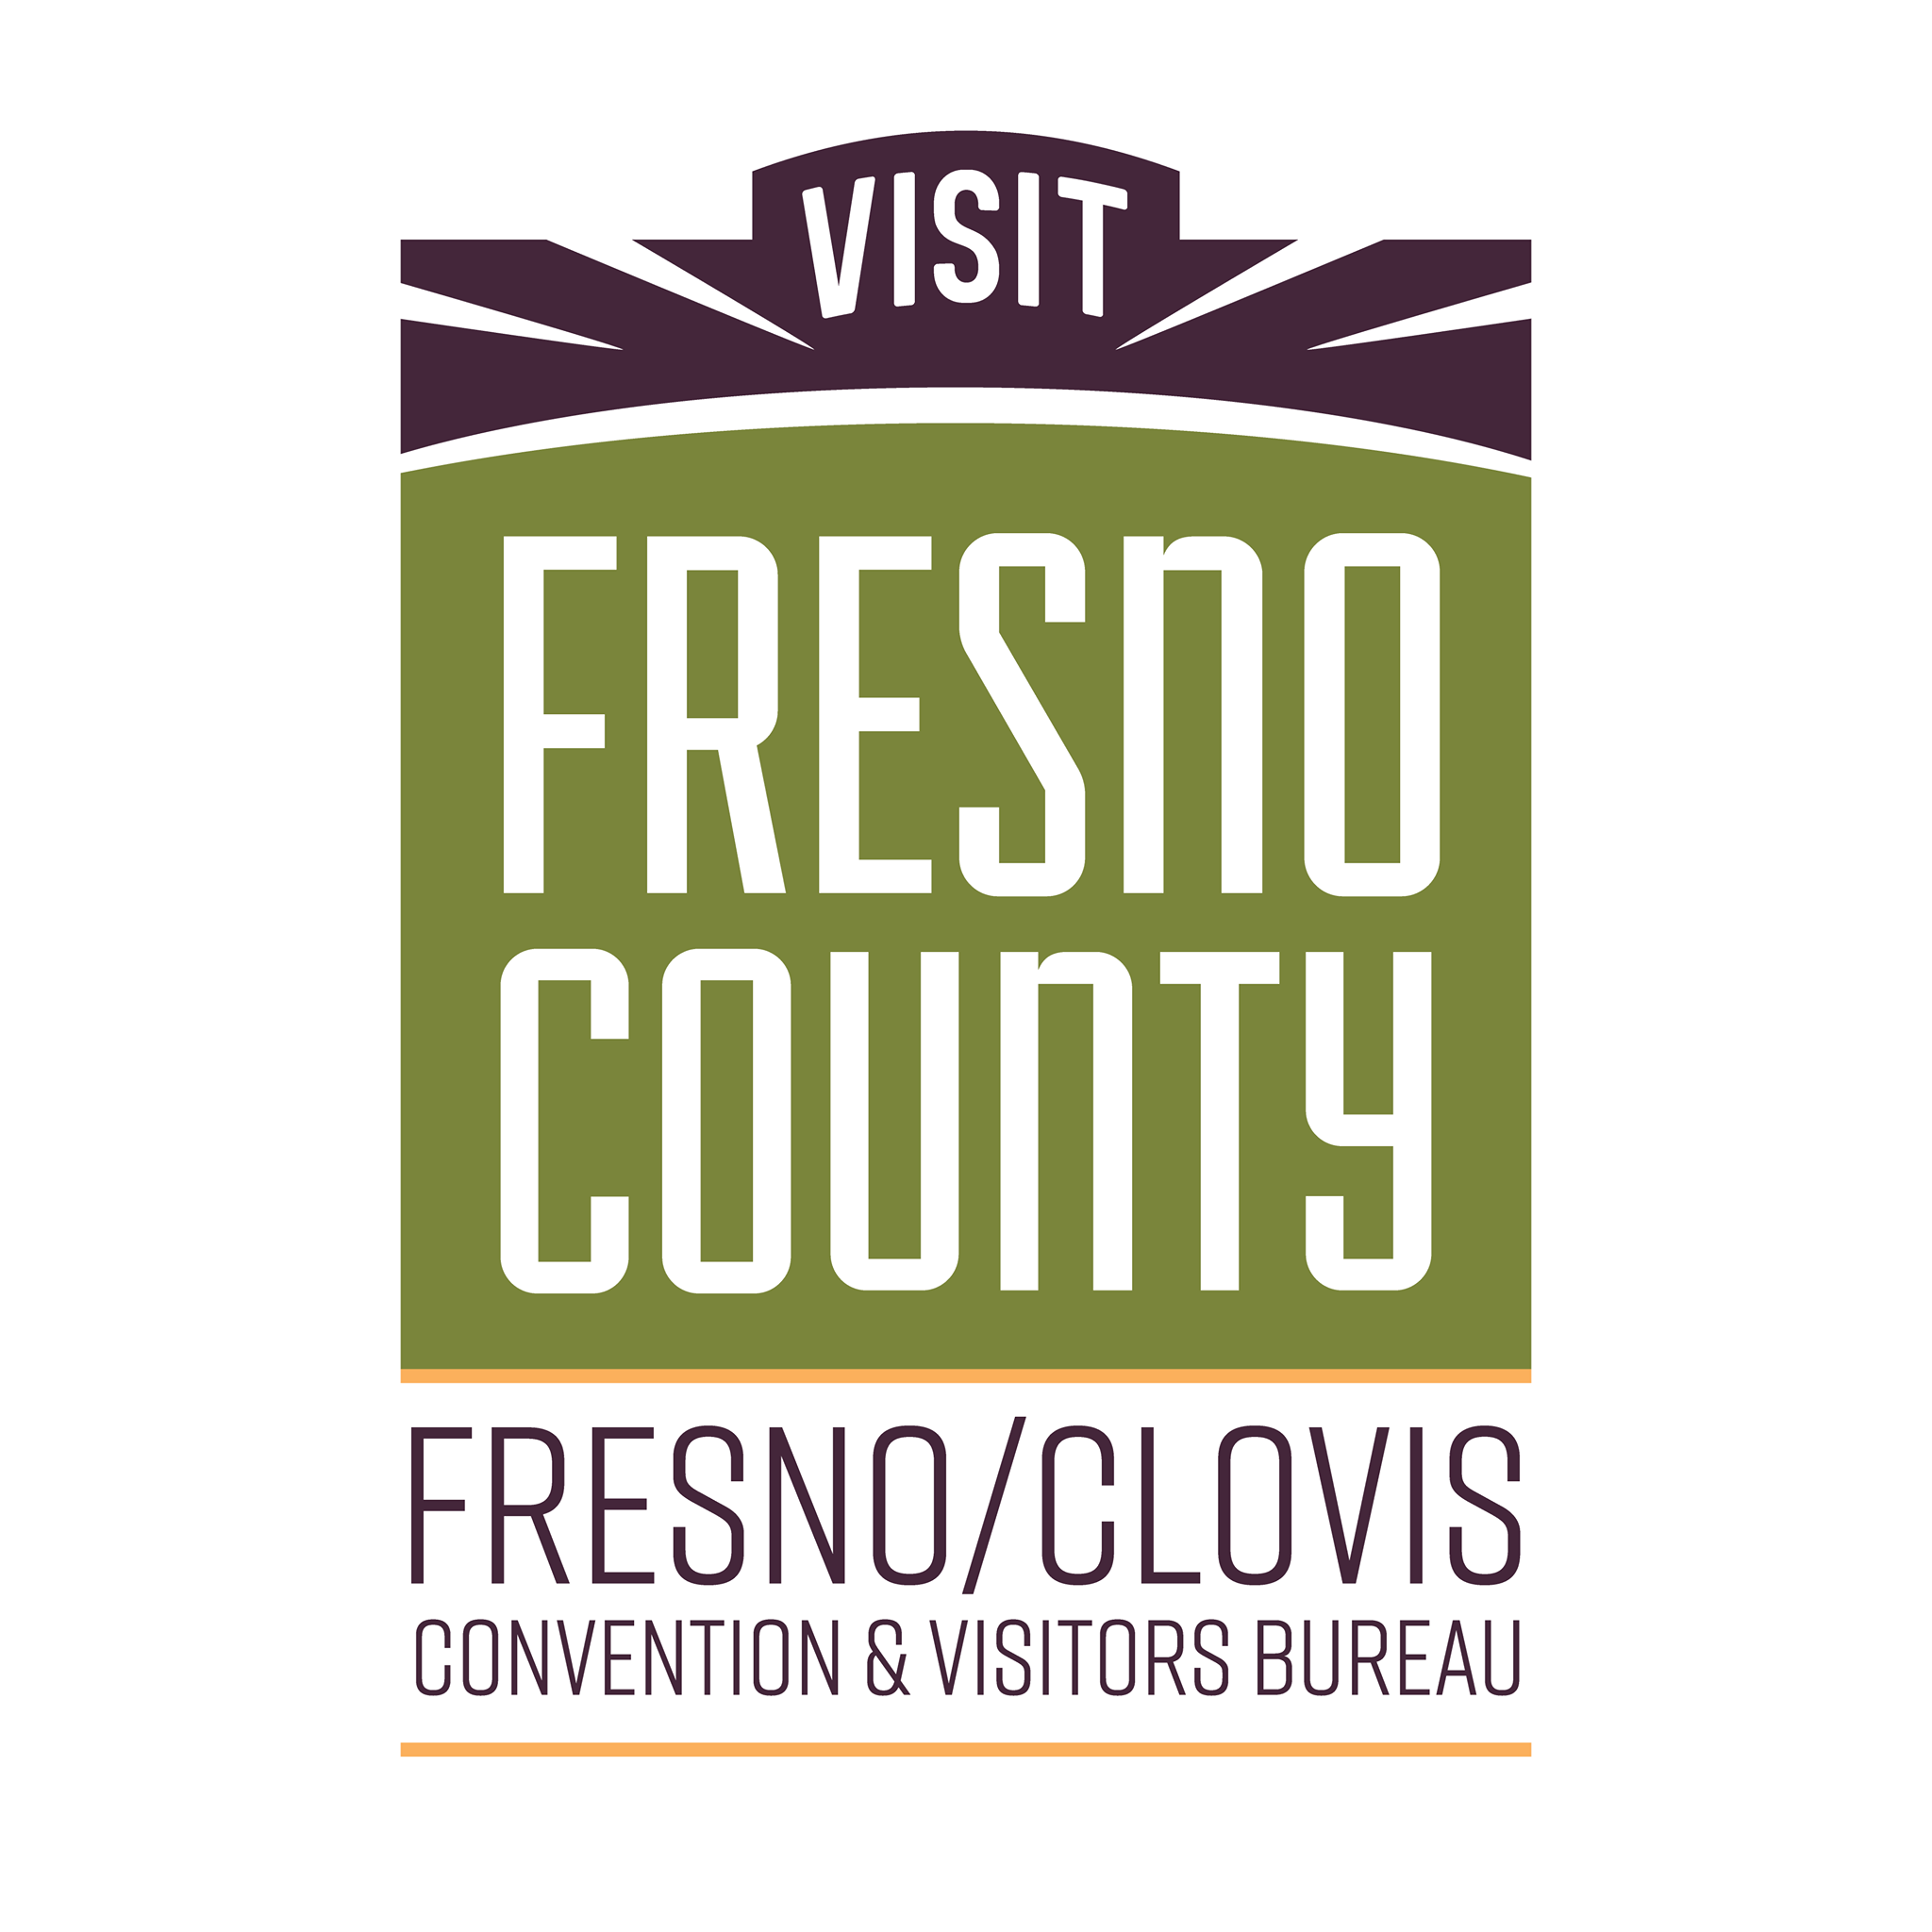 Visit Fresno County logo